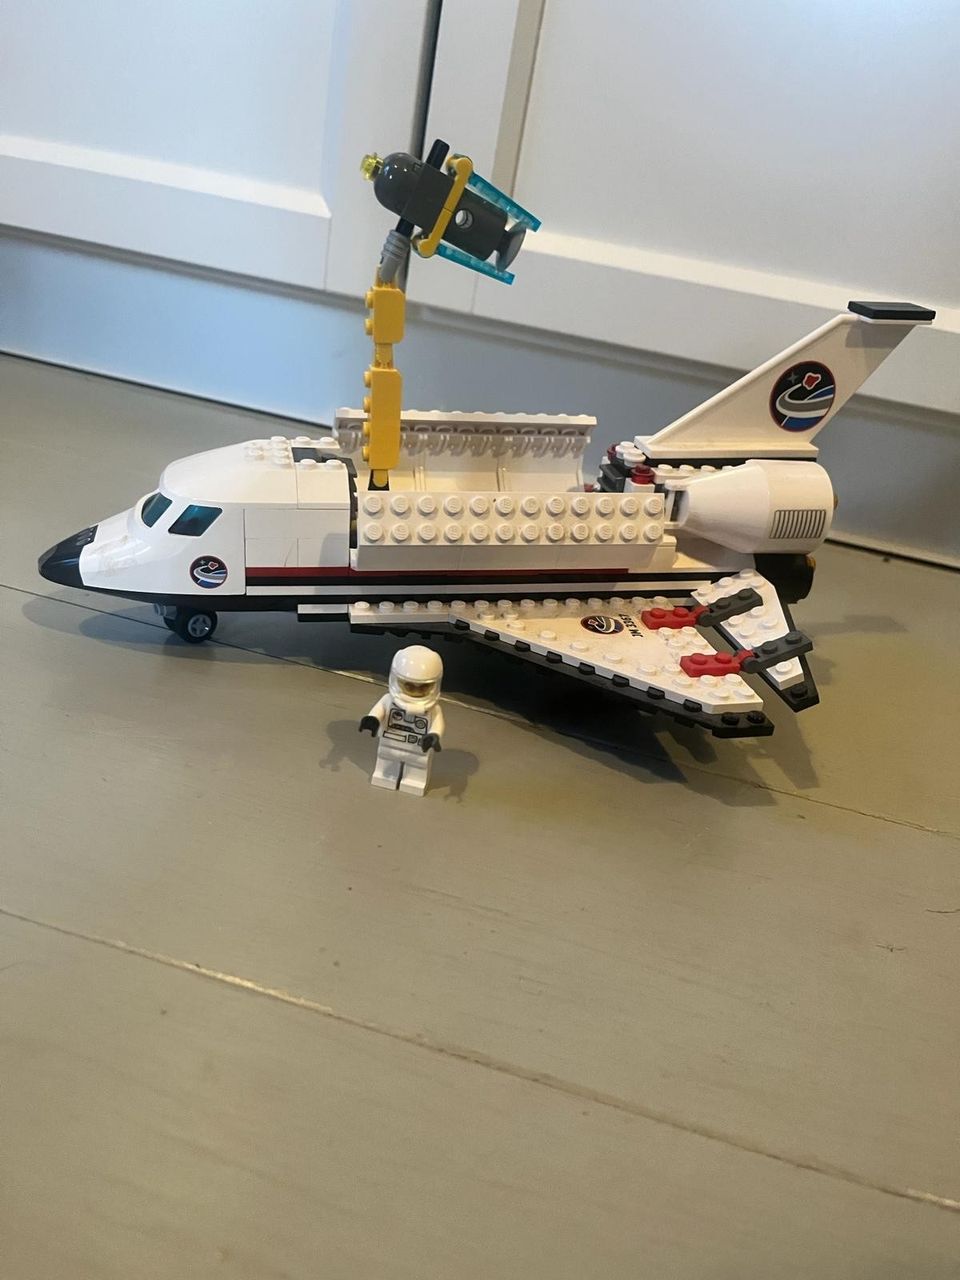 Lego 3367 avaruusalus